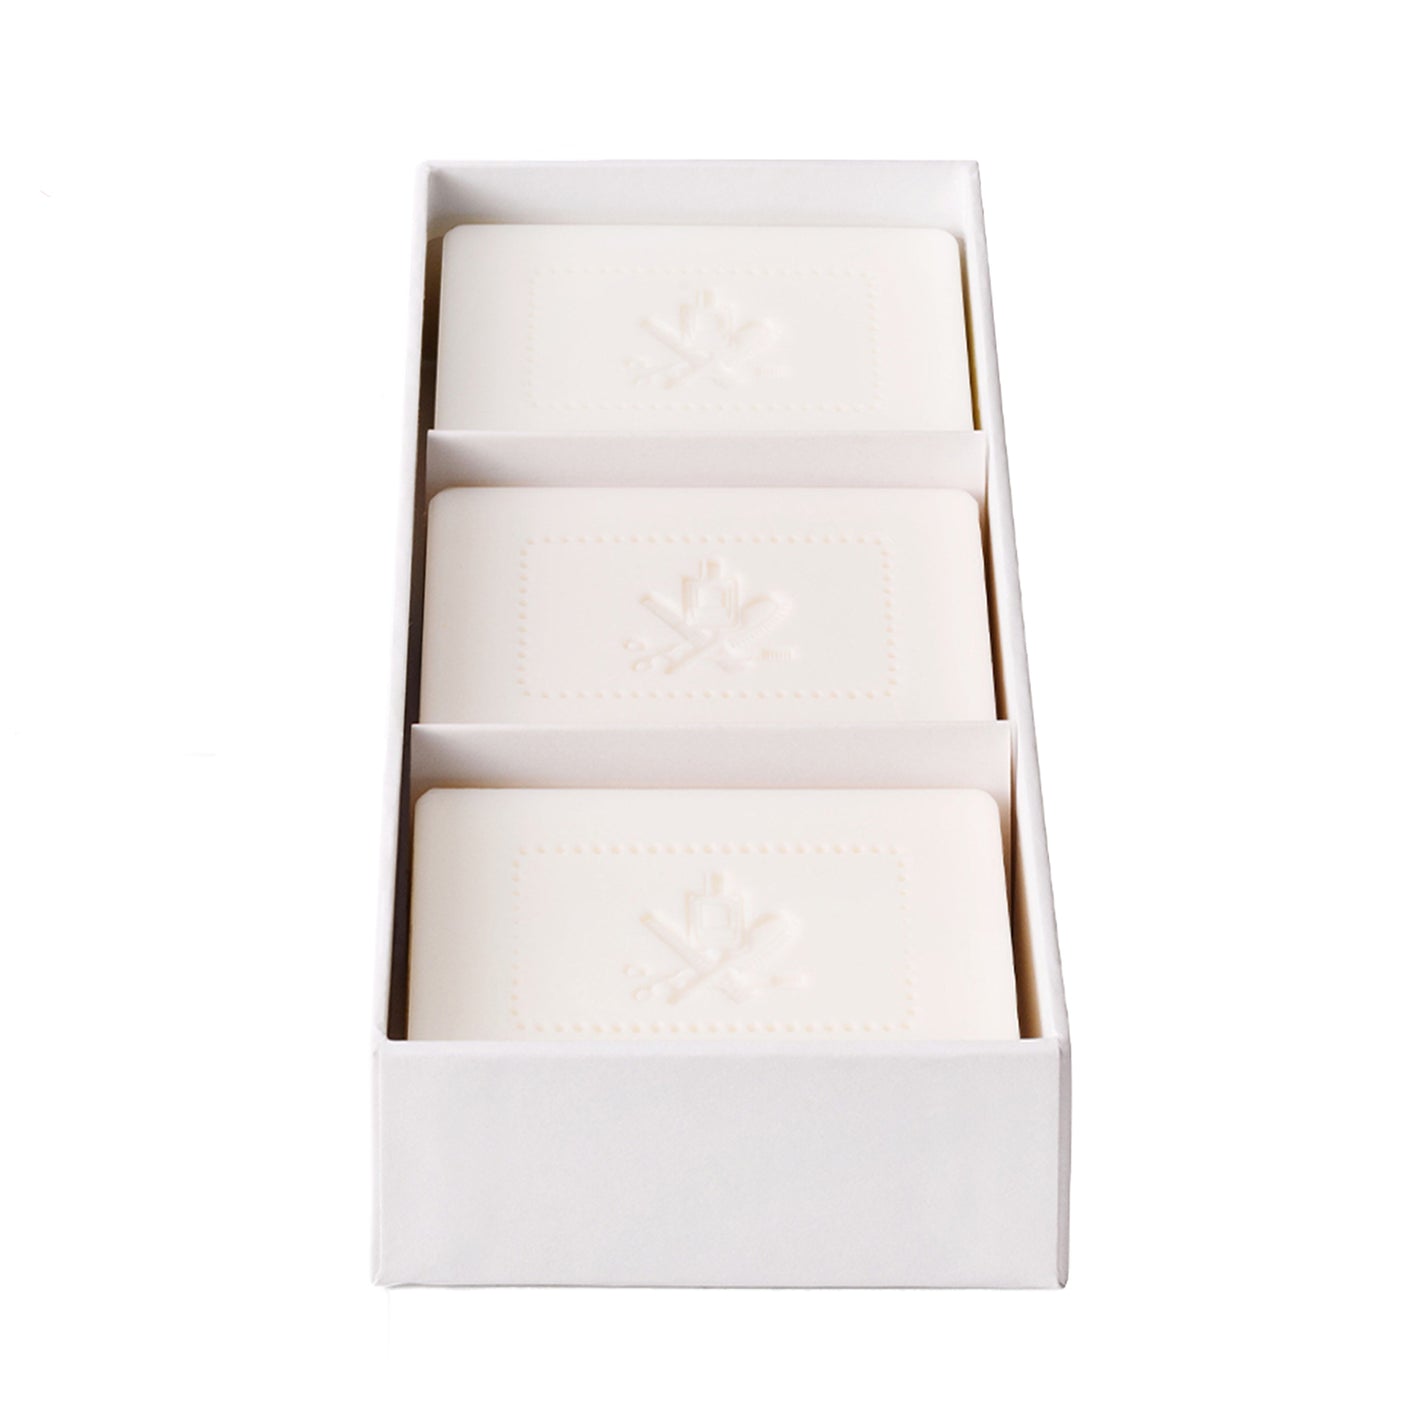 Acca Kappa Soap Gift Set (Thyme, Rosa, Juniper) - Value $45